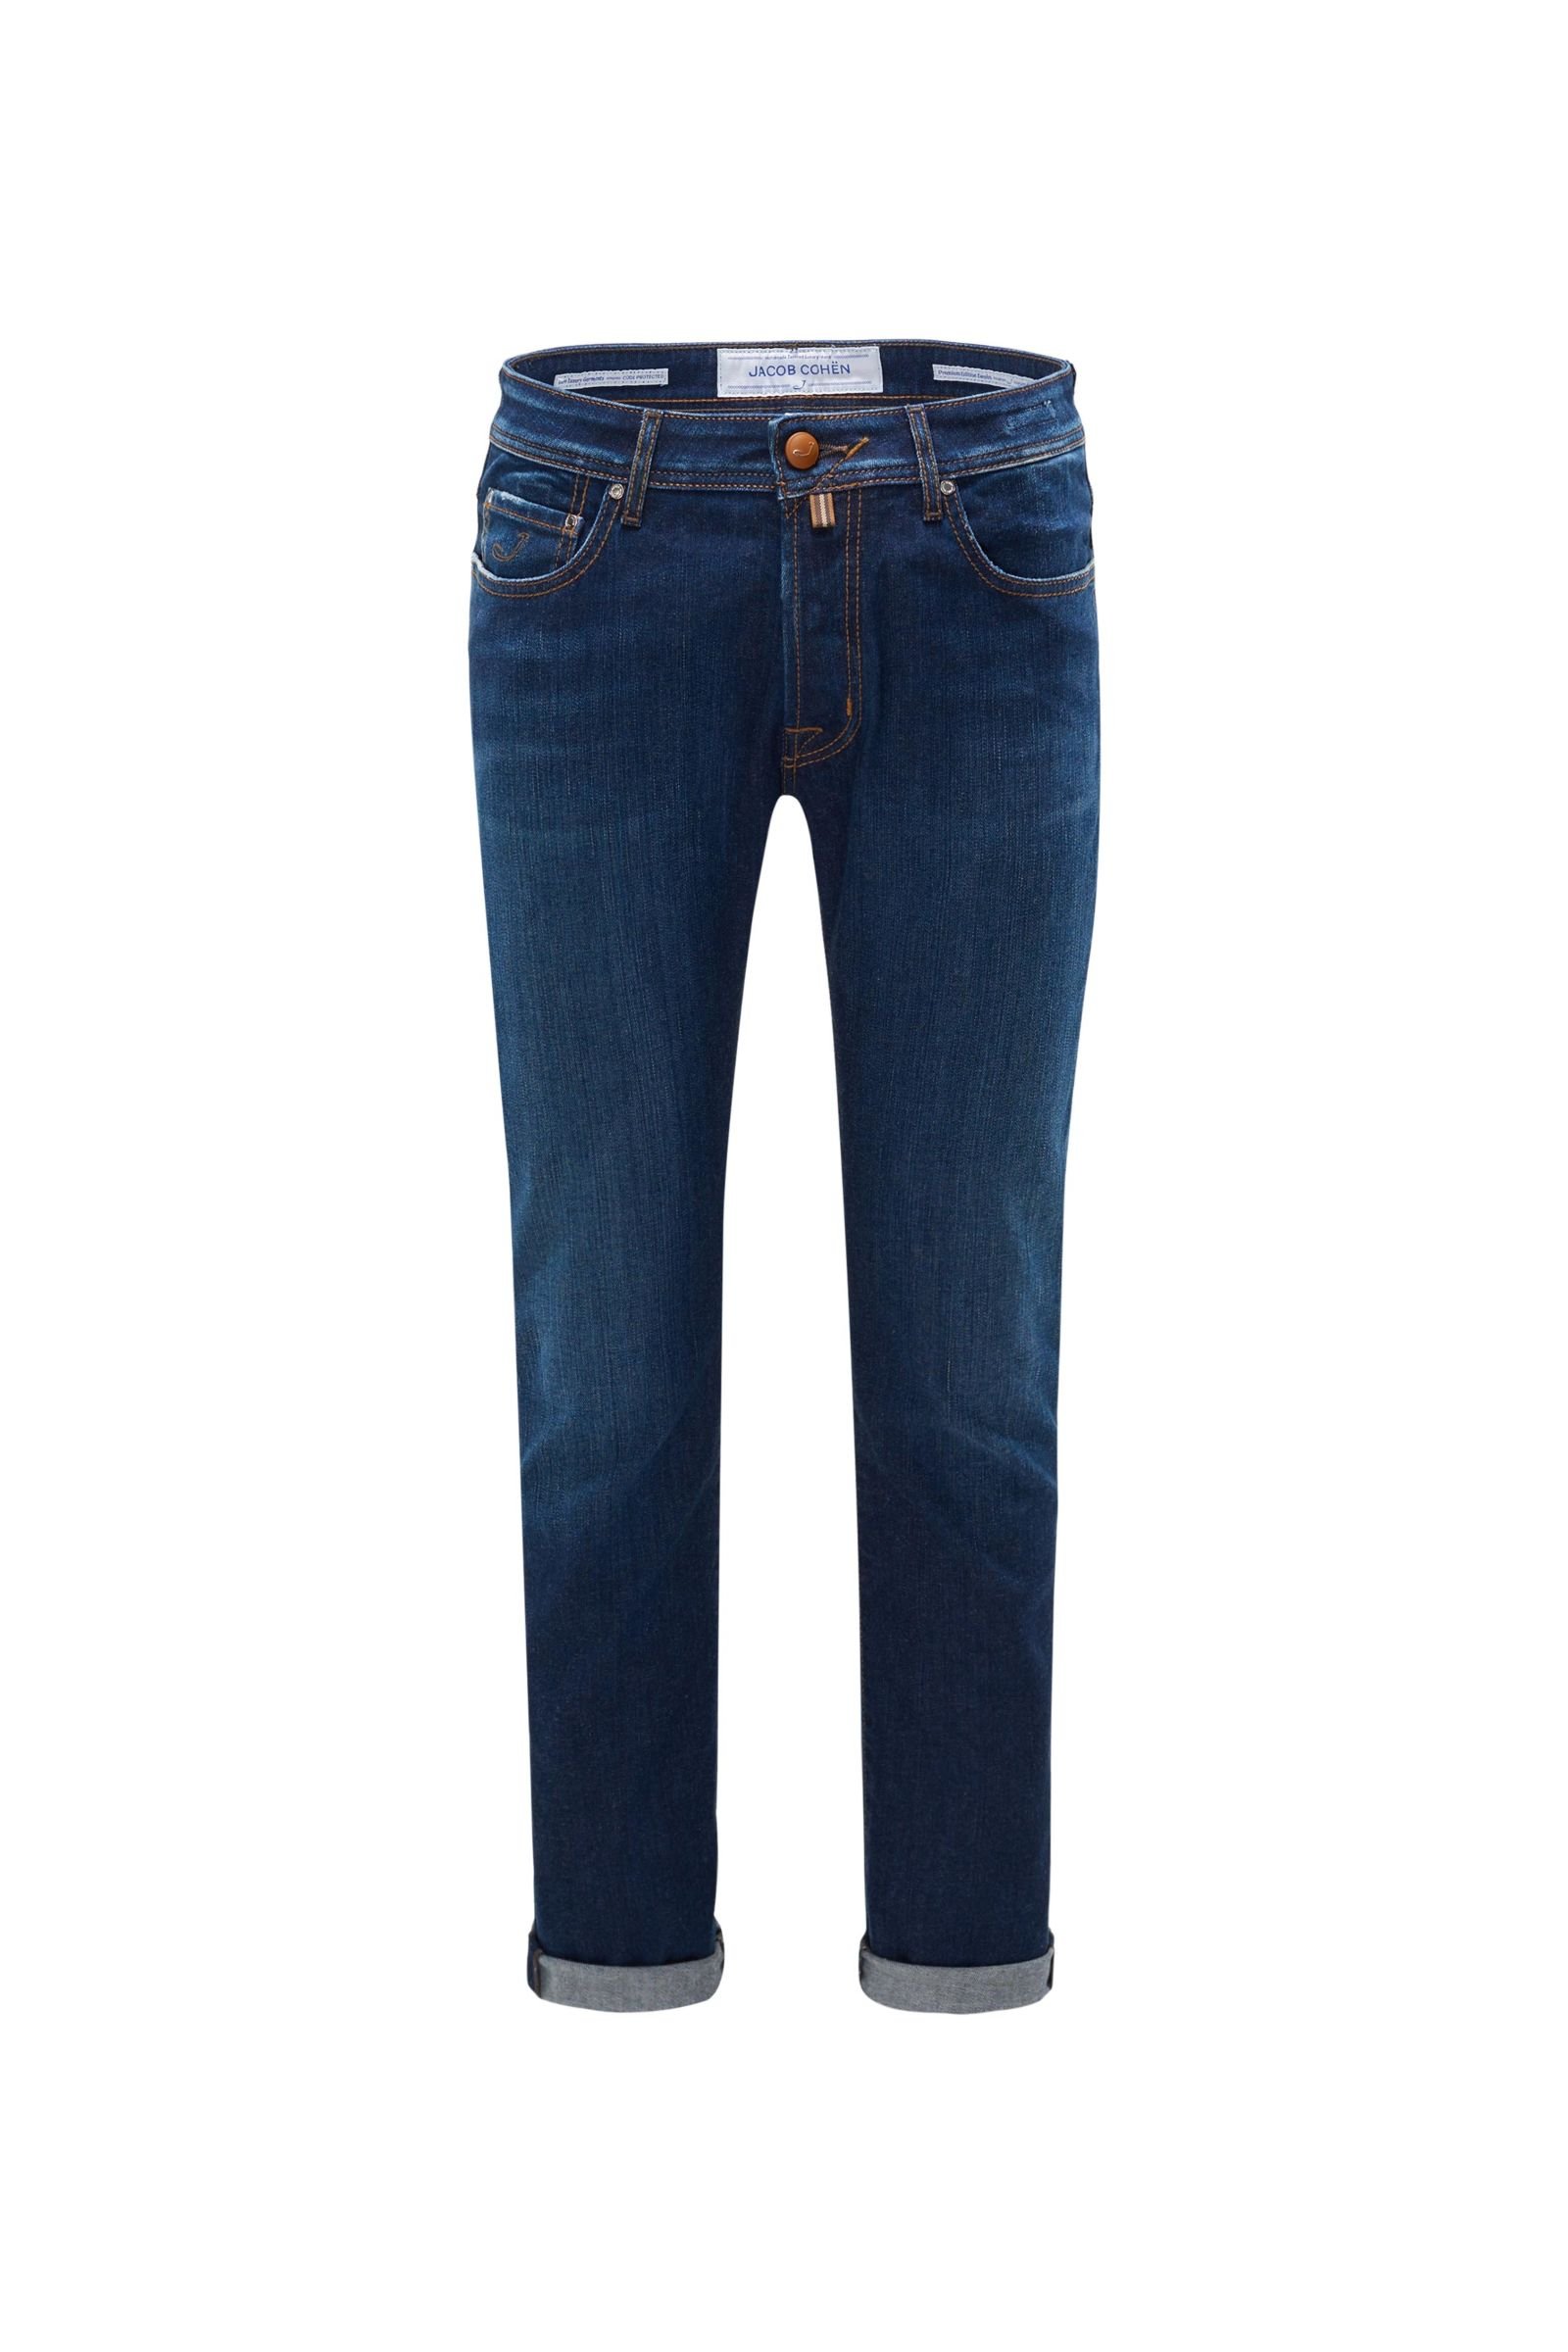 JACOB COHEN jeans 'J688 Comfort Slim Fit' dark blue | BRAUN Hamburg